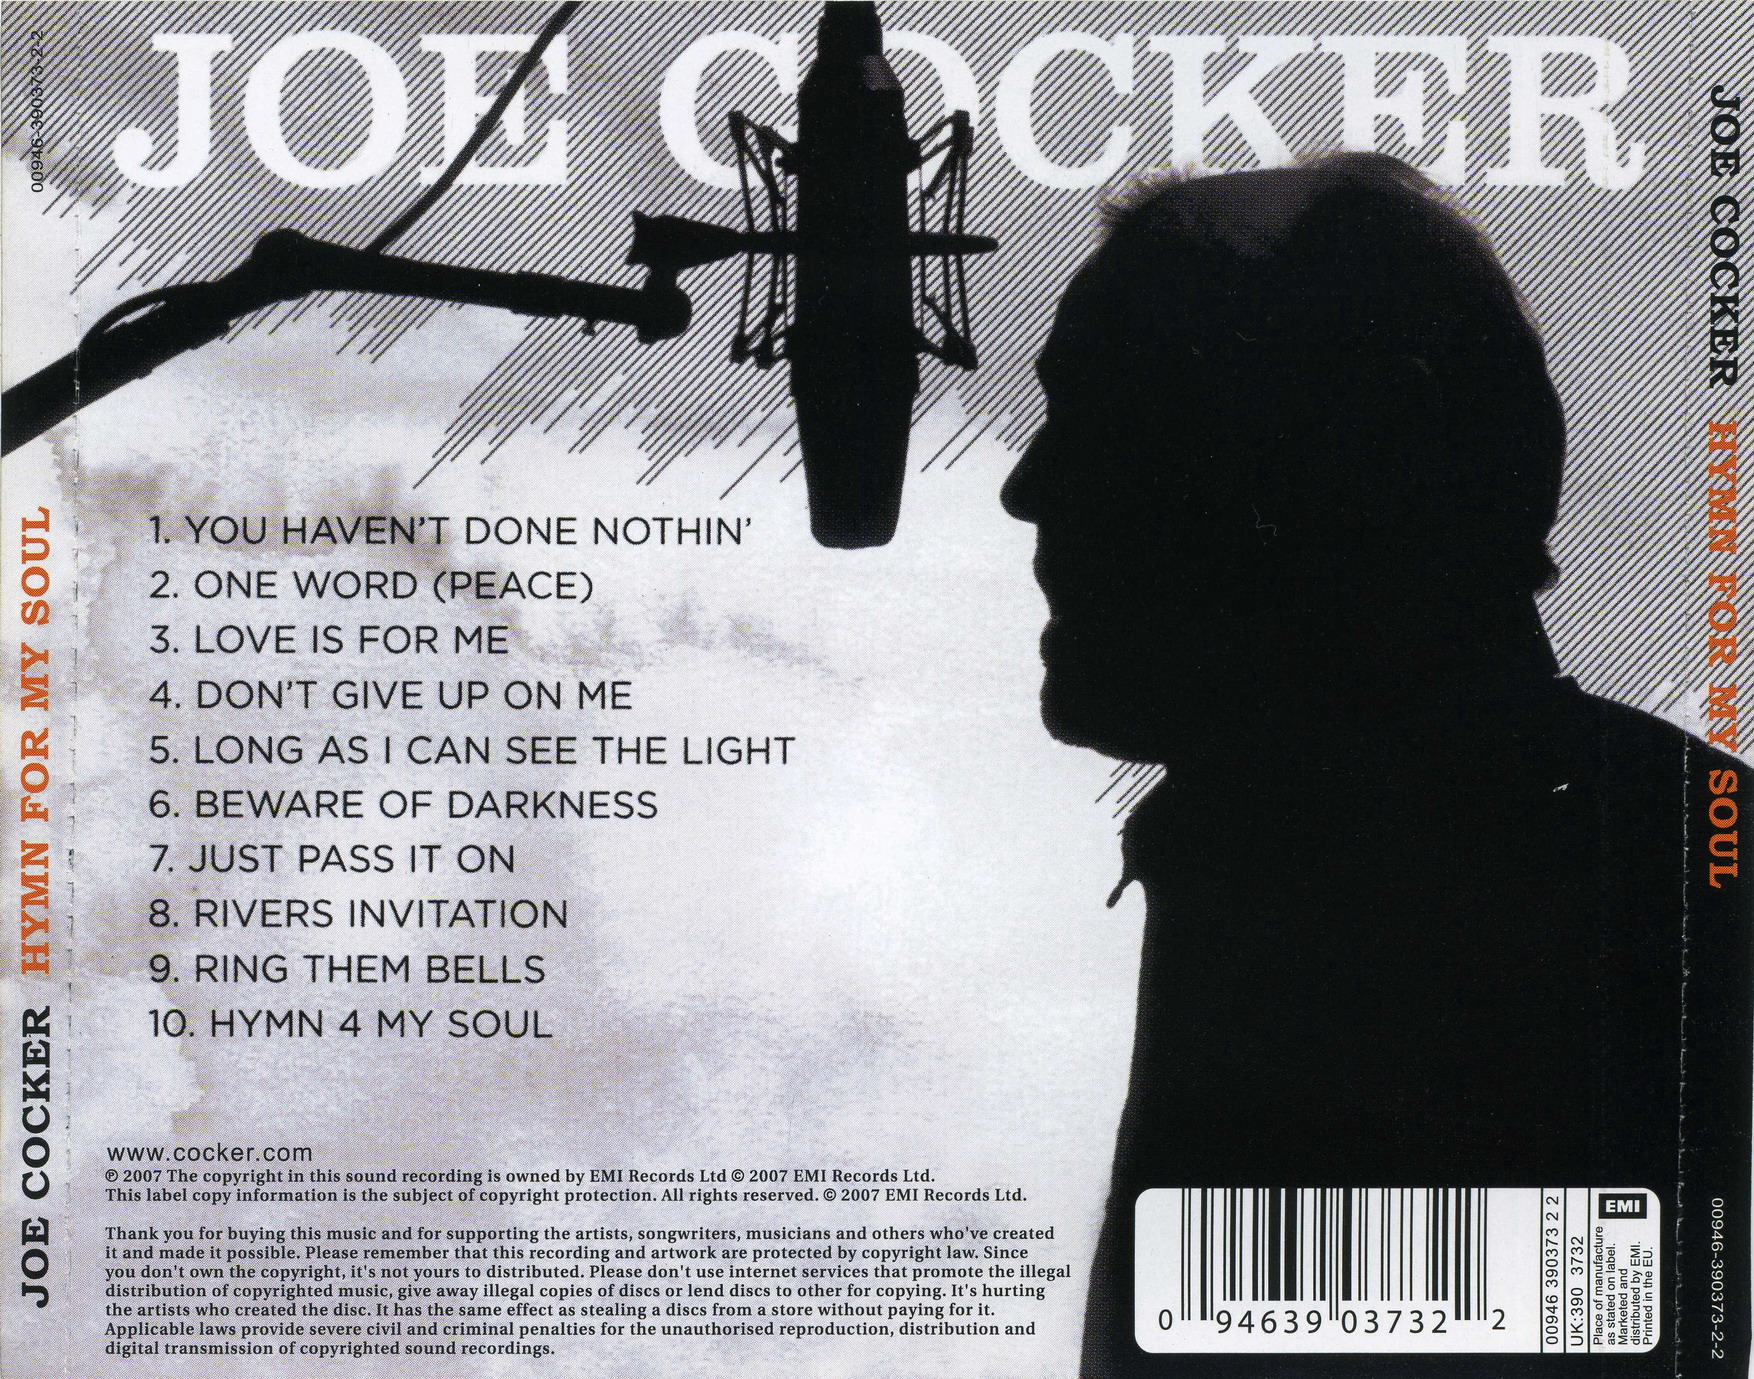 Joe Cocker альбом Hymn For My Soul 2007 